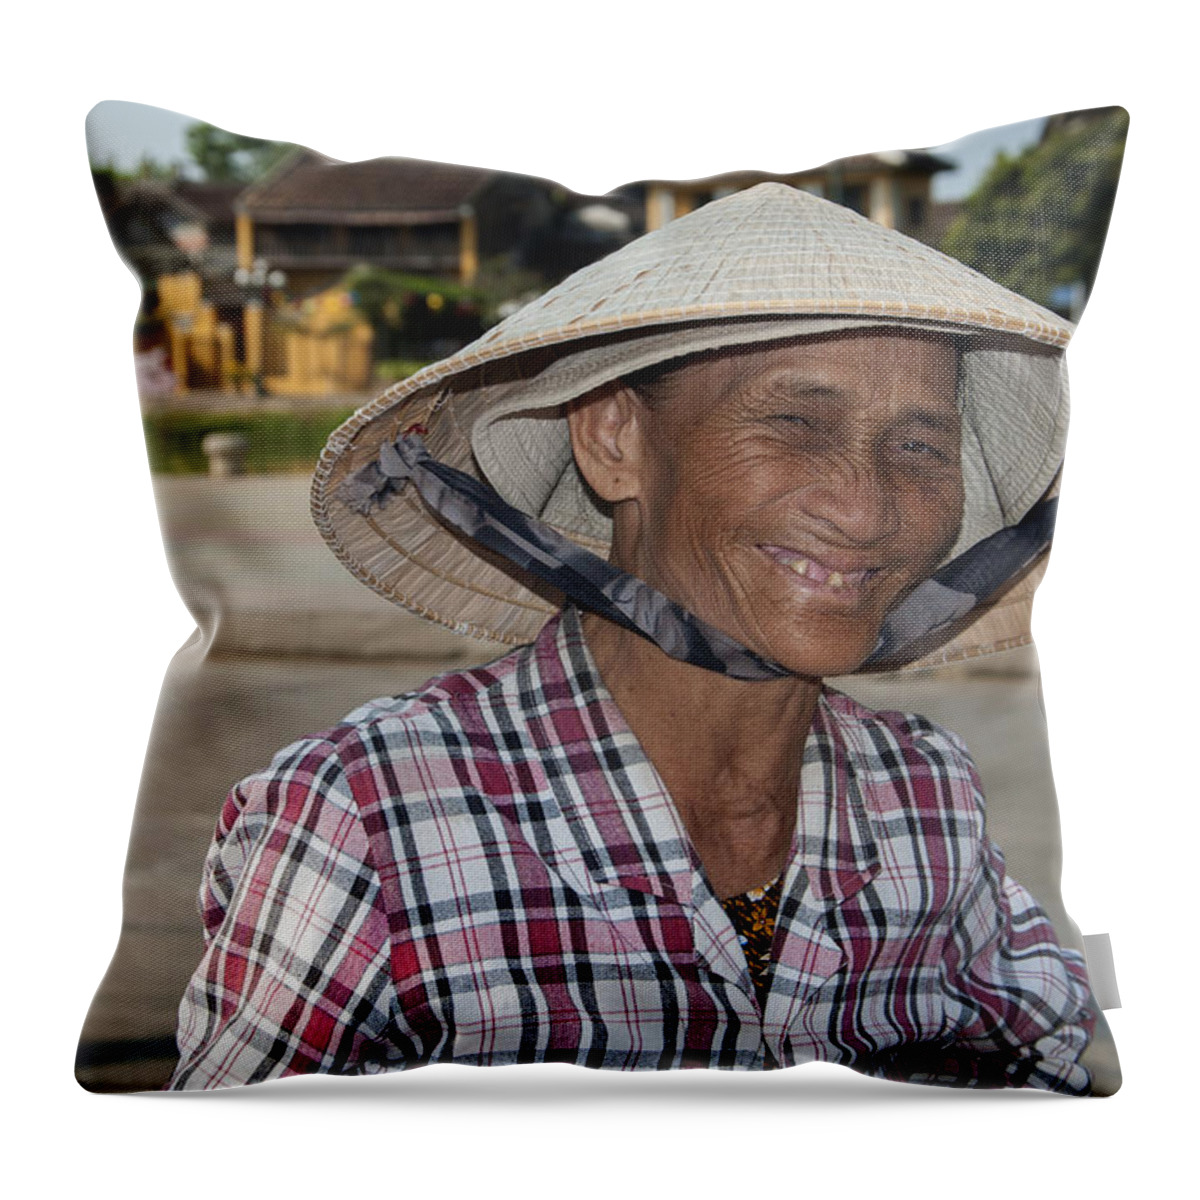 Vietnamese Street Vendor Throw Pillow featuring the photograph Vietnamese Street Vendor by Rob Hemphill